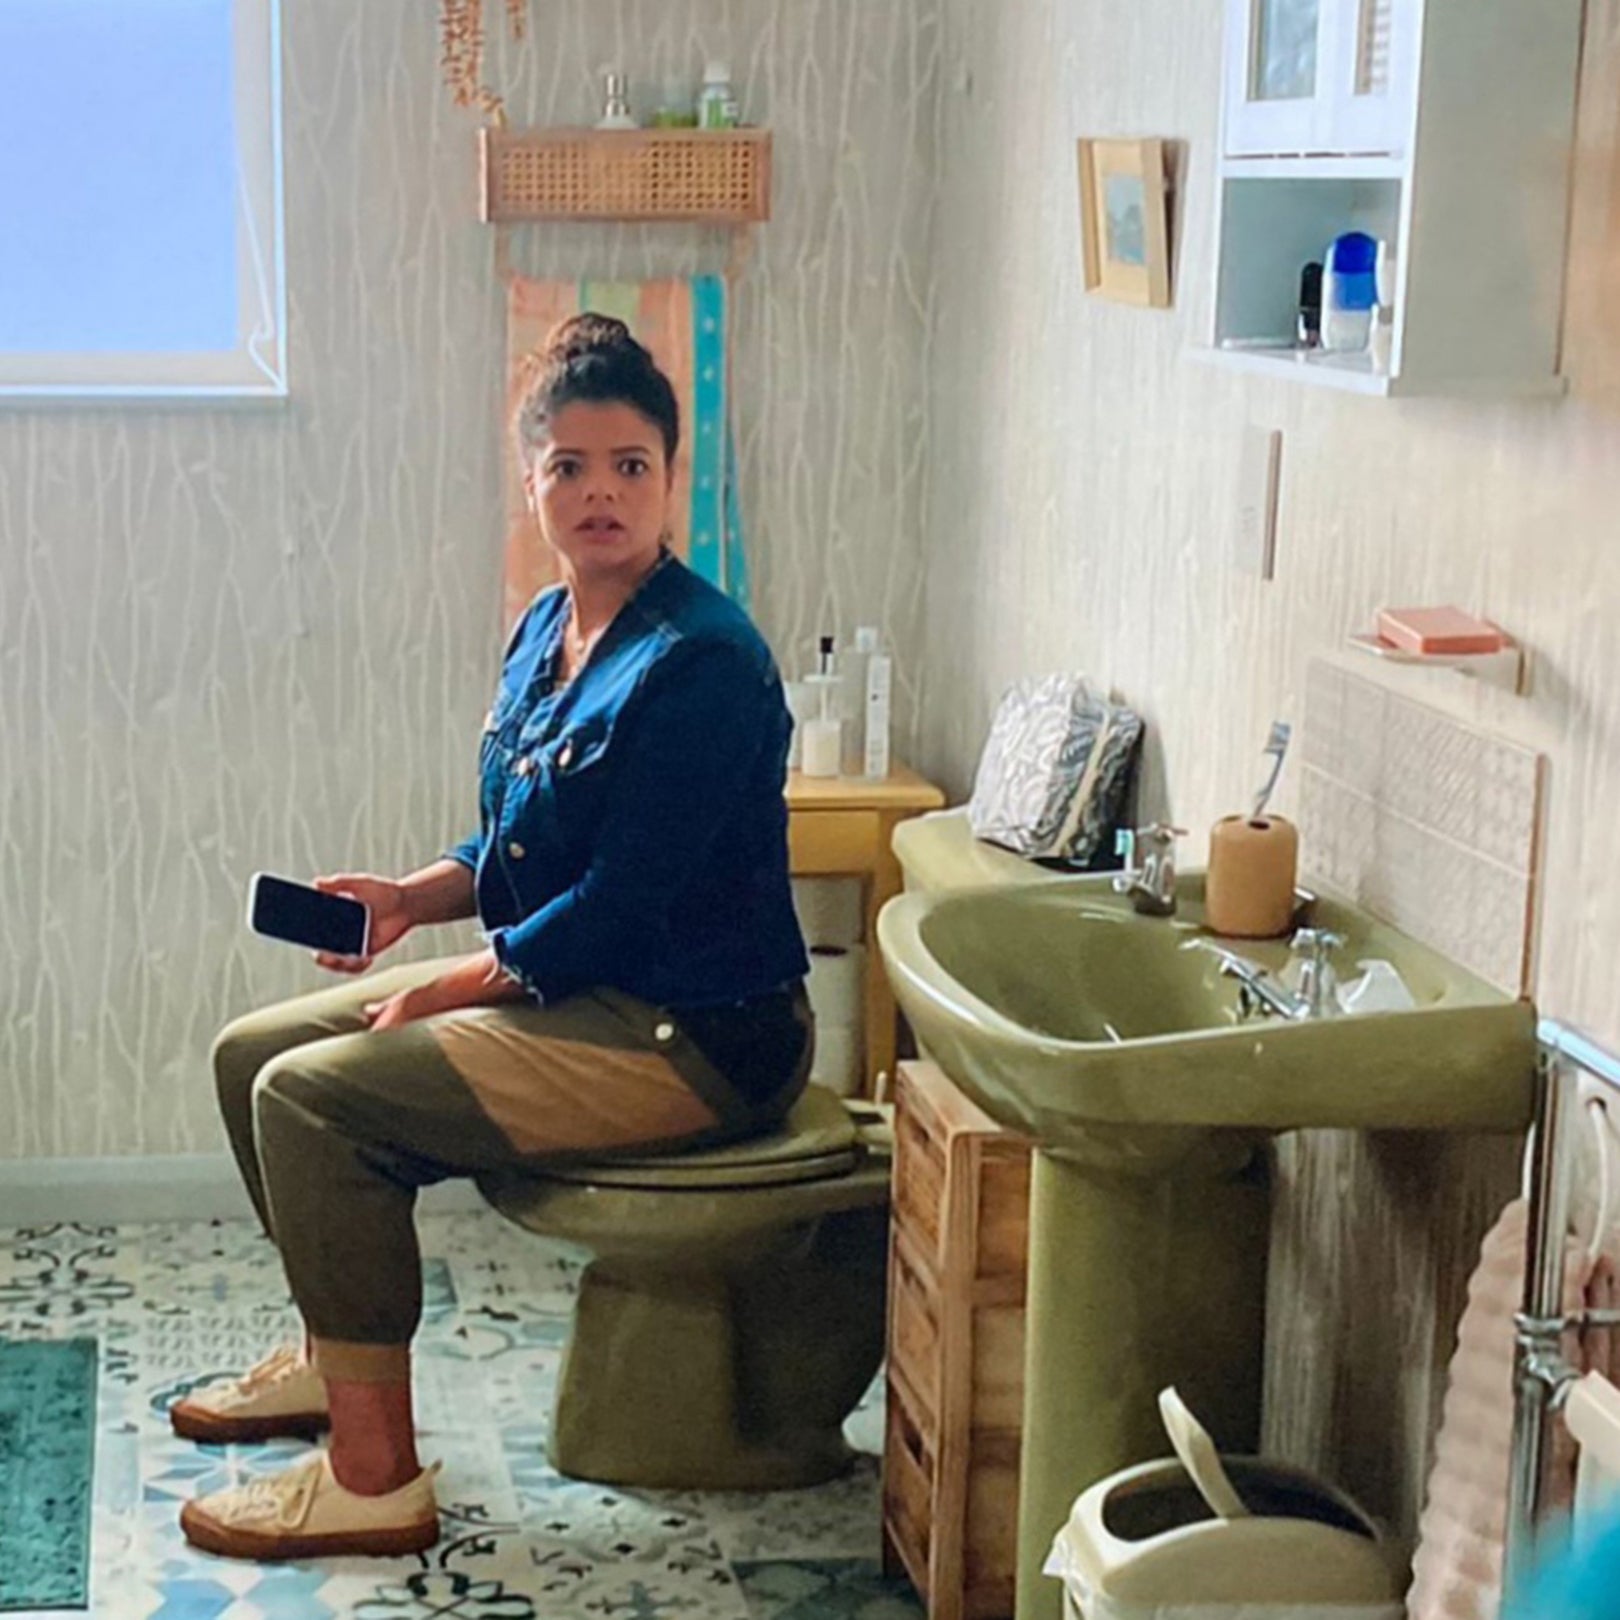 Retro Avocado bathroom scene TV film props